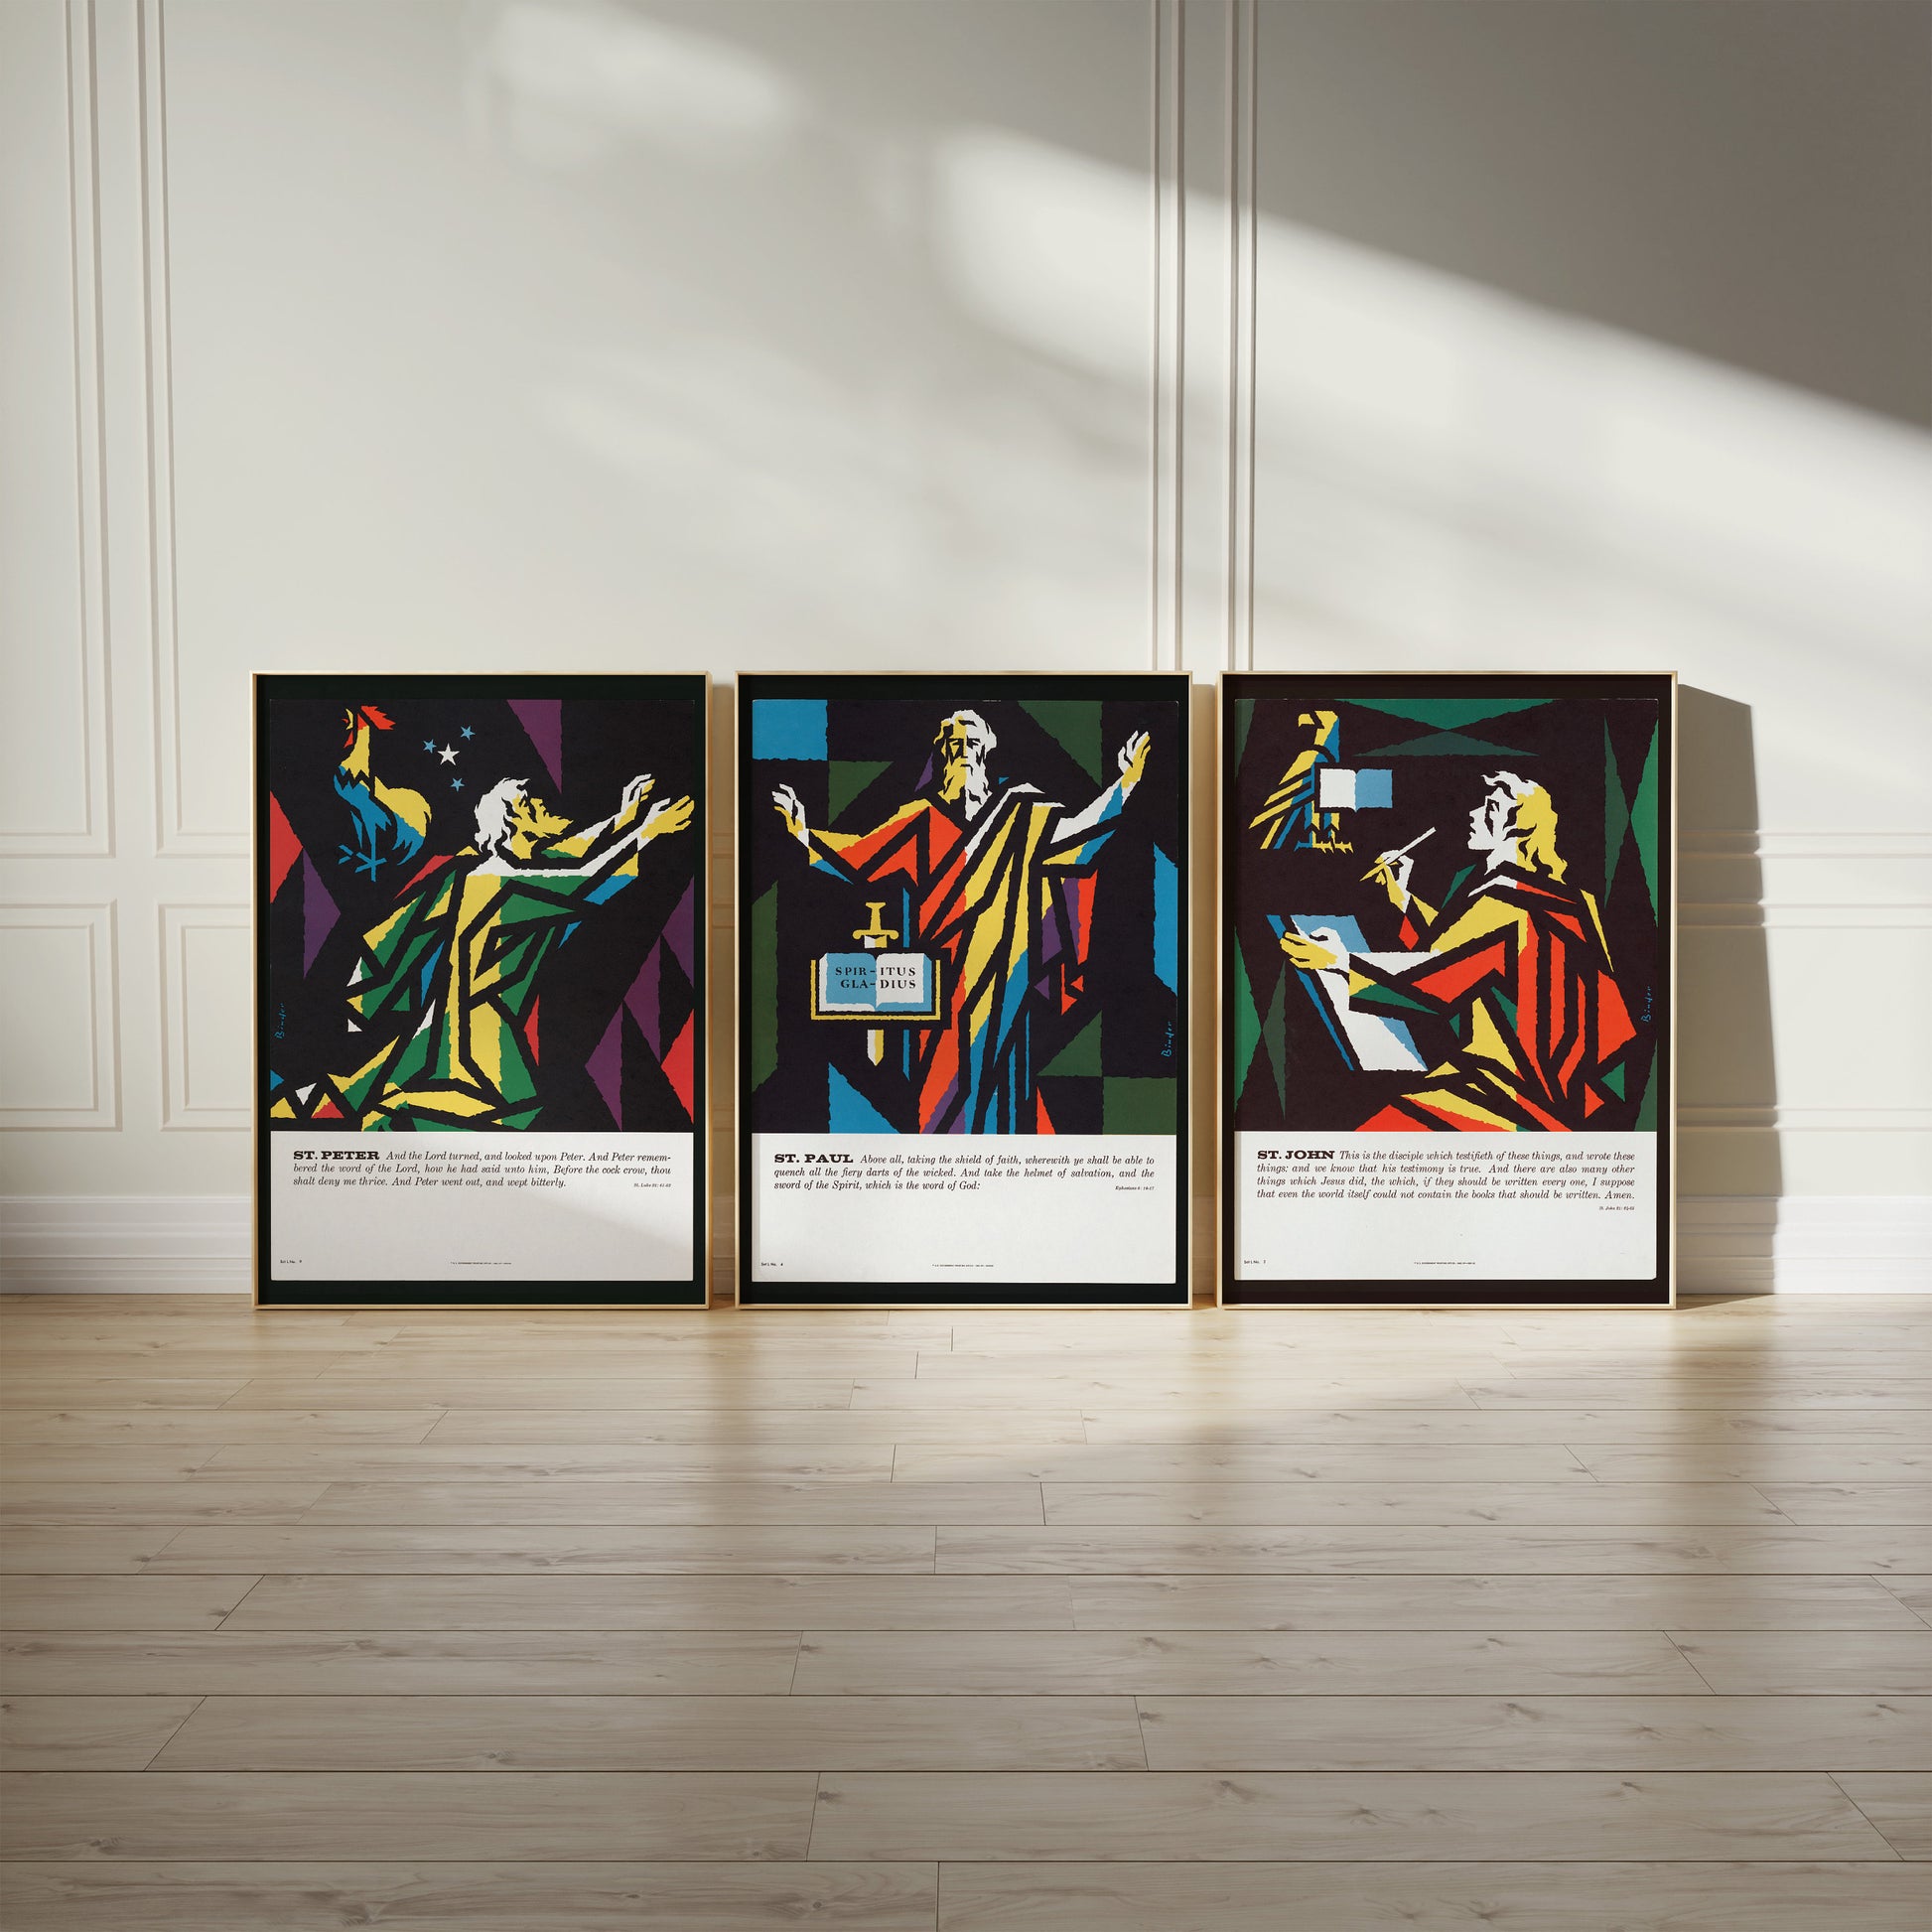 Josef Binder - St. Peter, St. Paul and St. John | Set of 3 Christian Art Posters, Mid-century Modern Design (available framed or unframed)